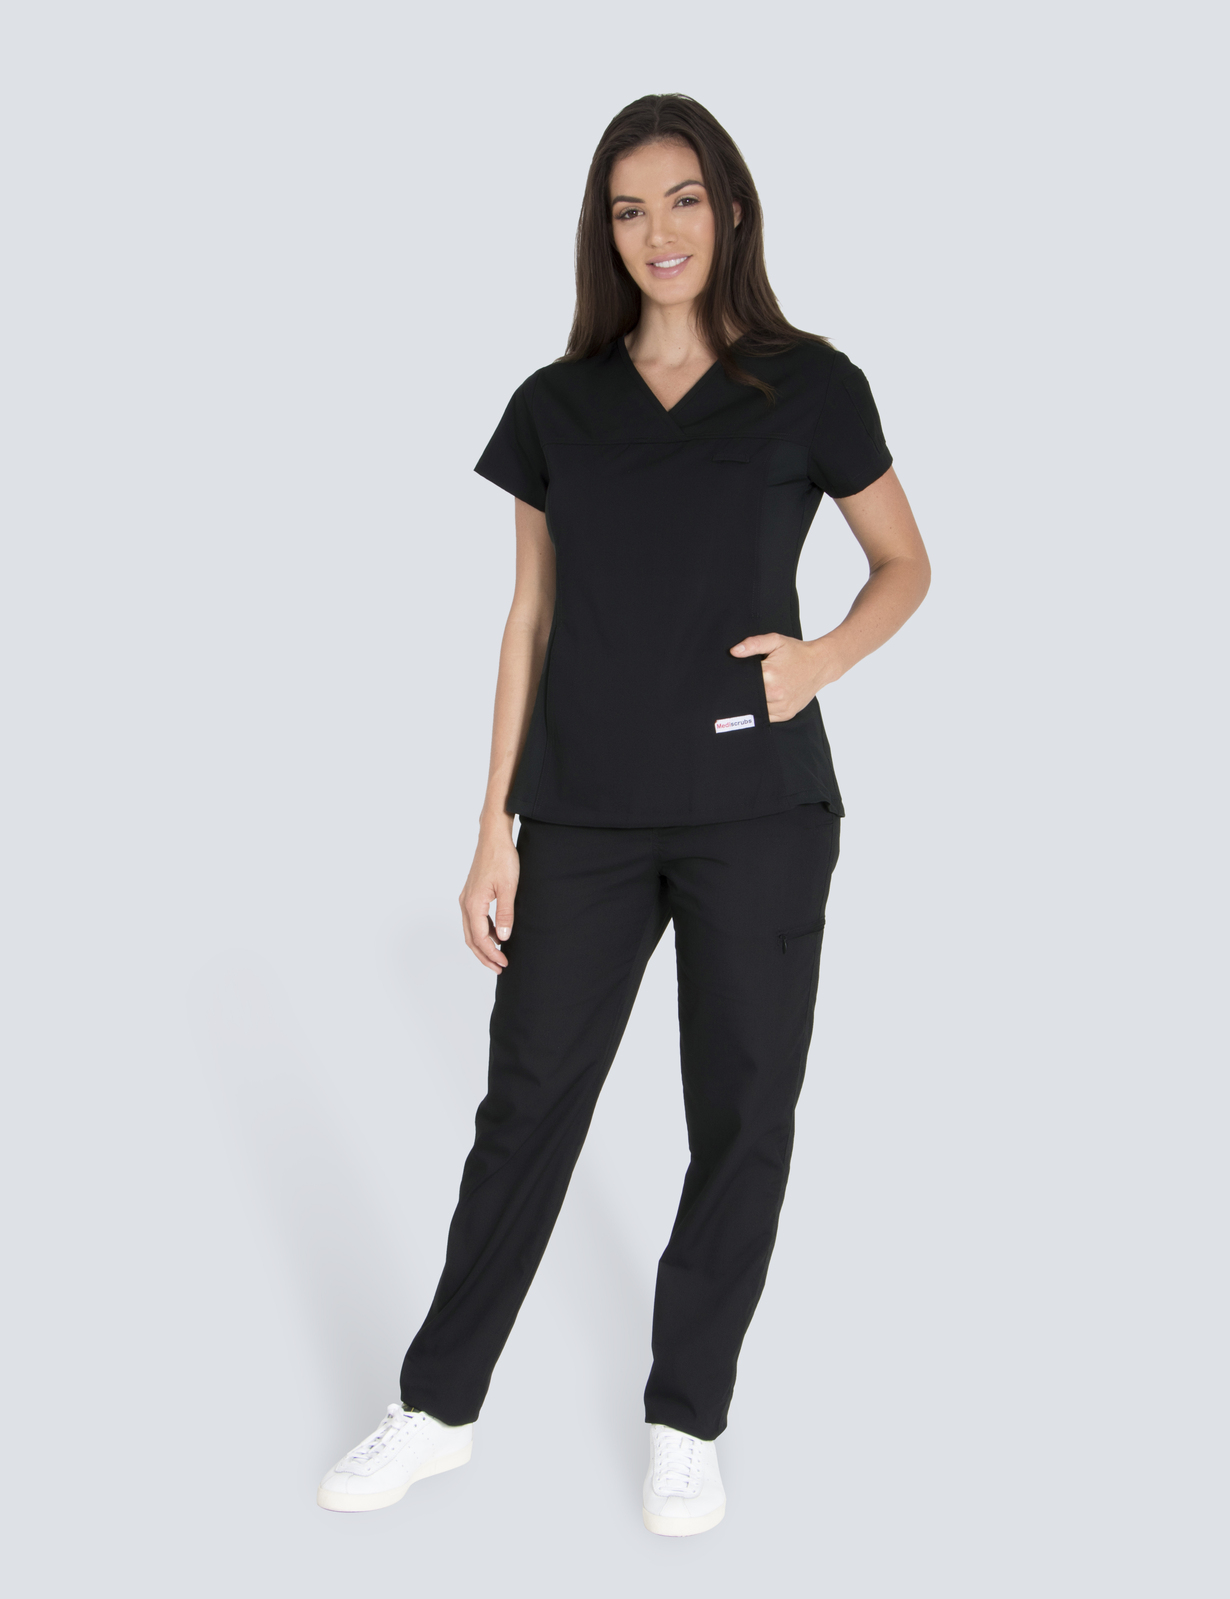 PAH - Medical Imaging (Women's Fit Spandex Scrub Top and Cargo Pants in Black incl Logos)